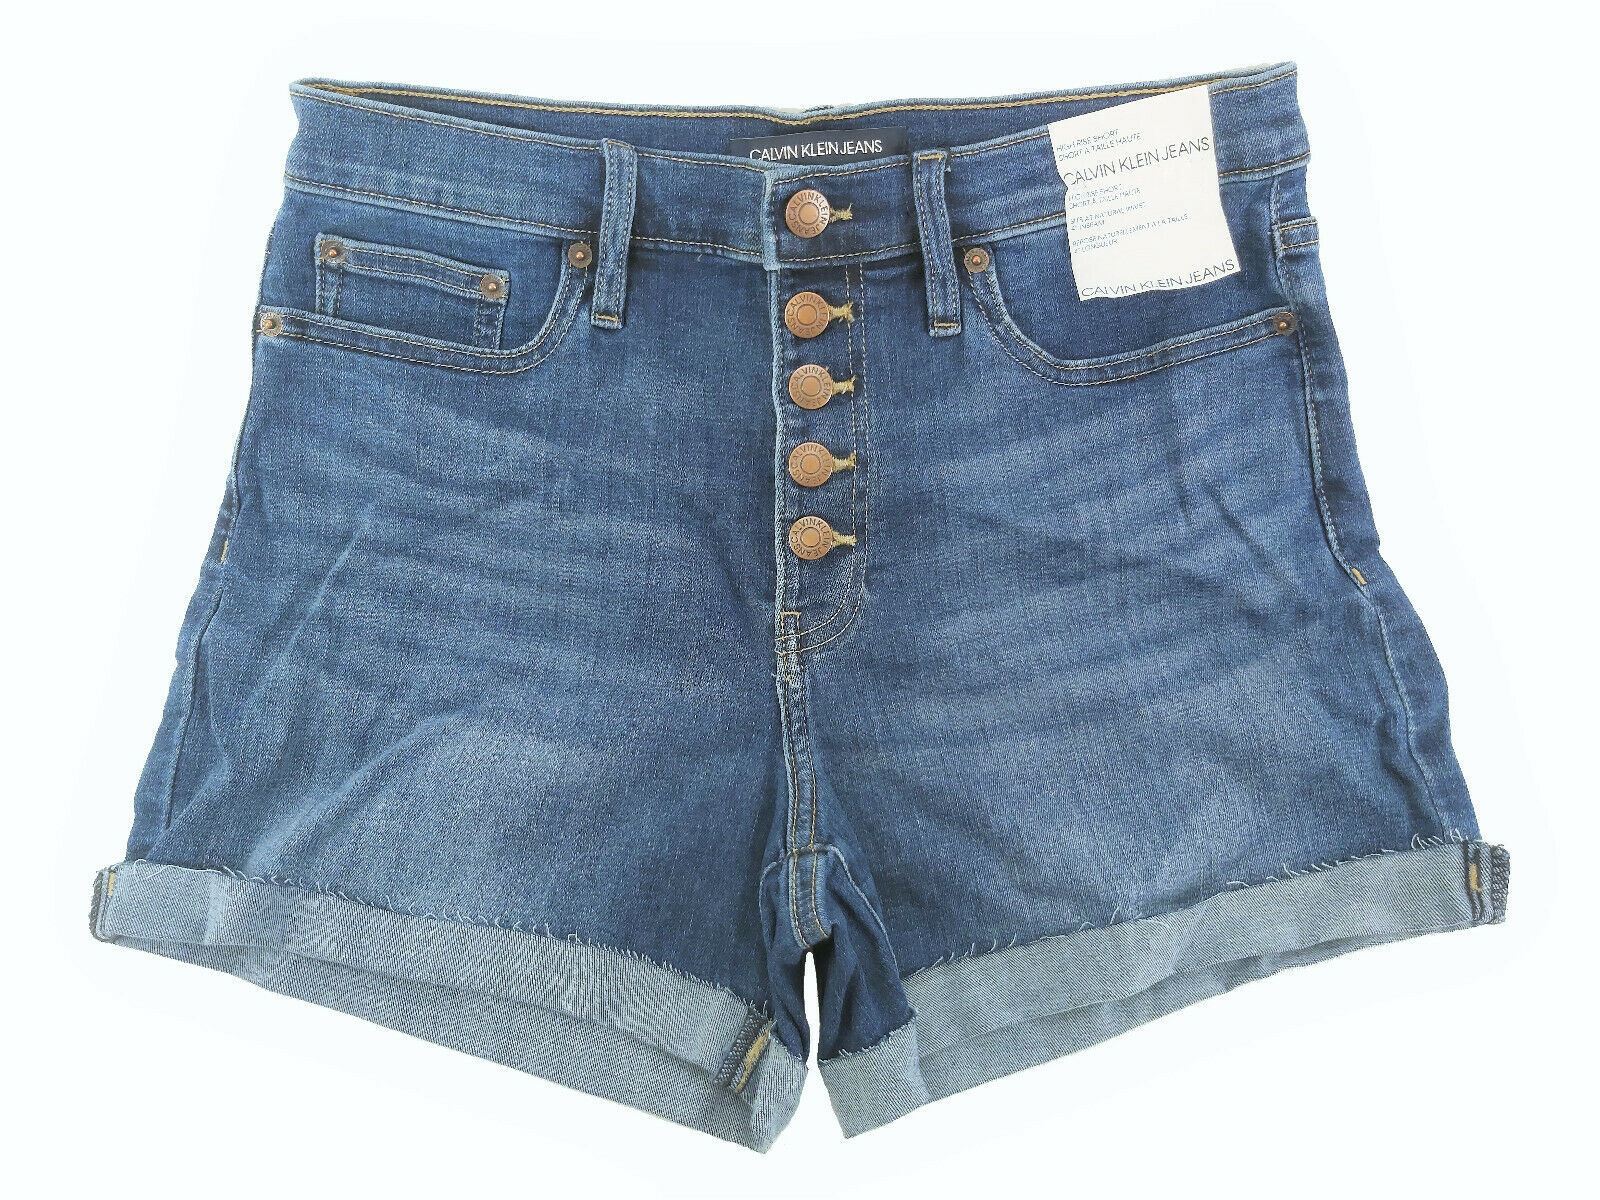 Calvin Klein Jeans Women's Repreve High Rise Buttonfly Short 4 ...